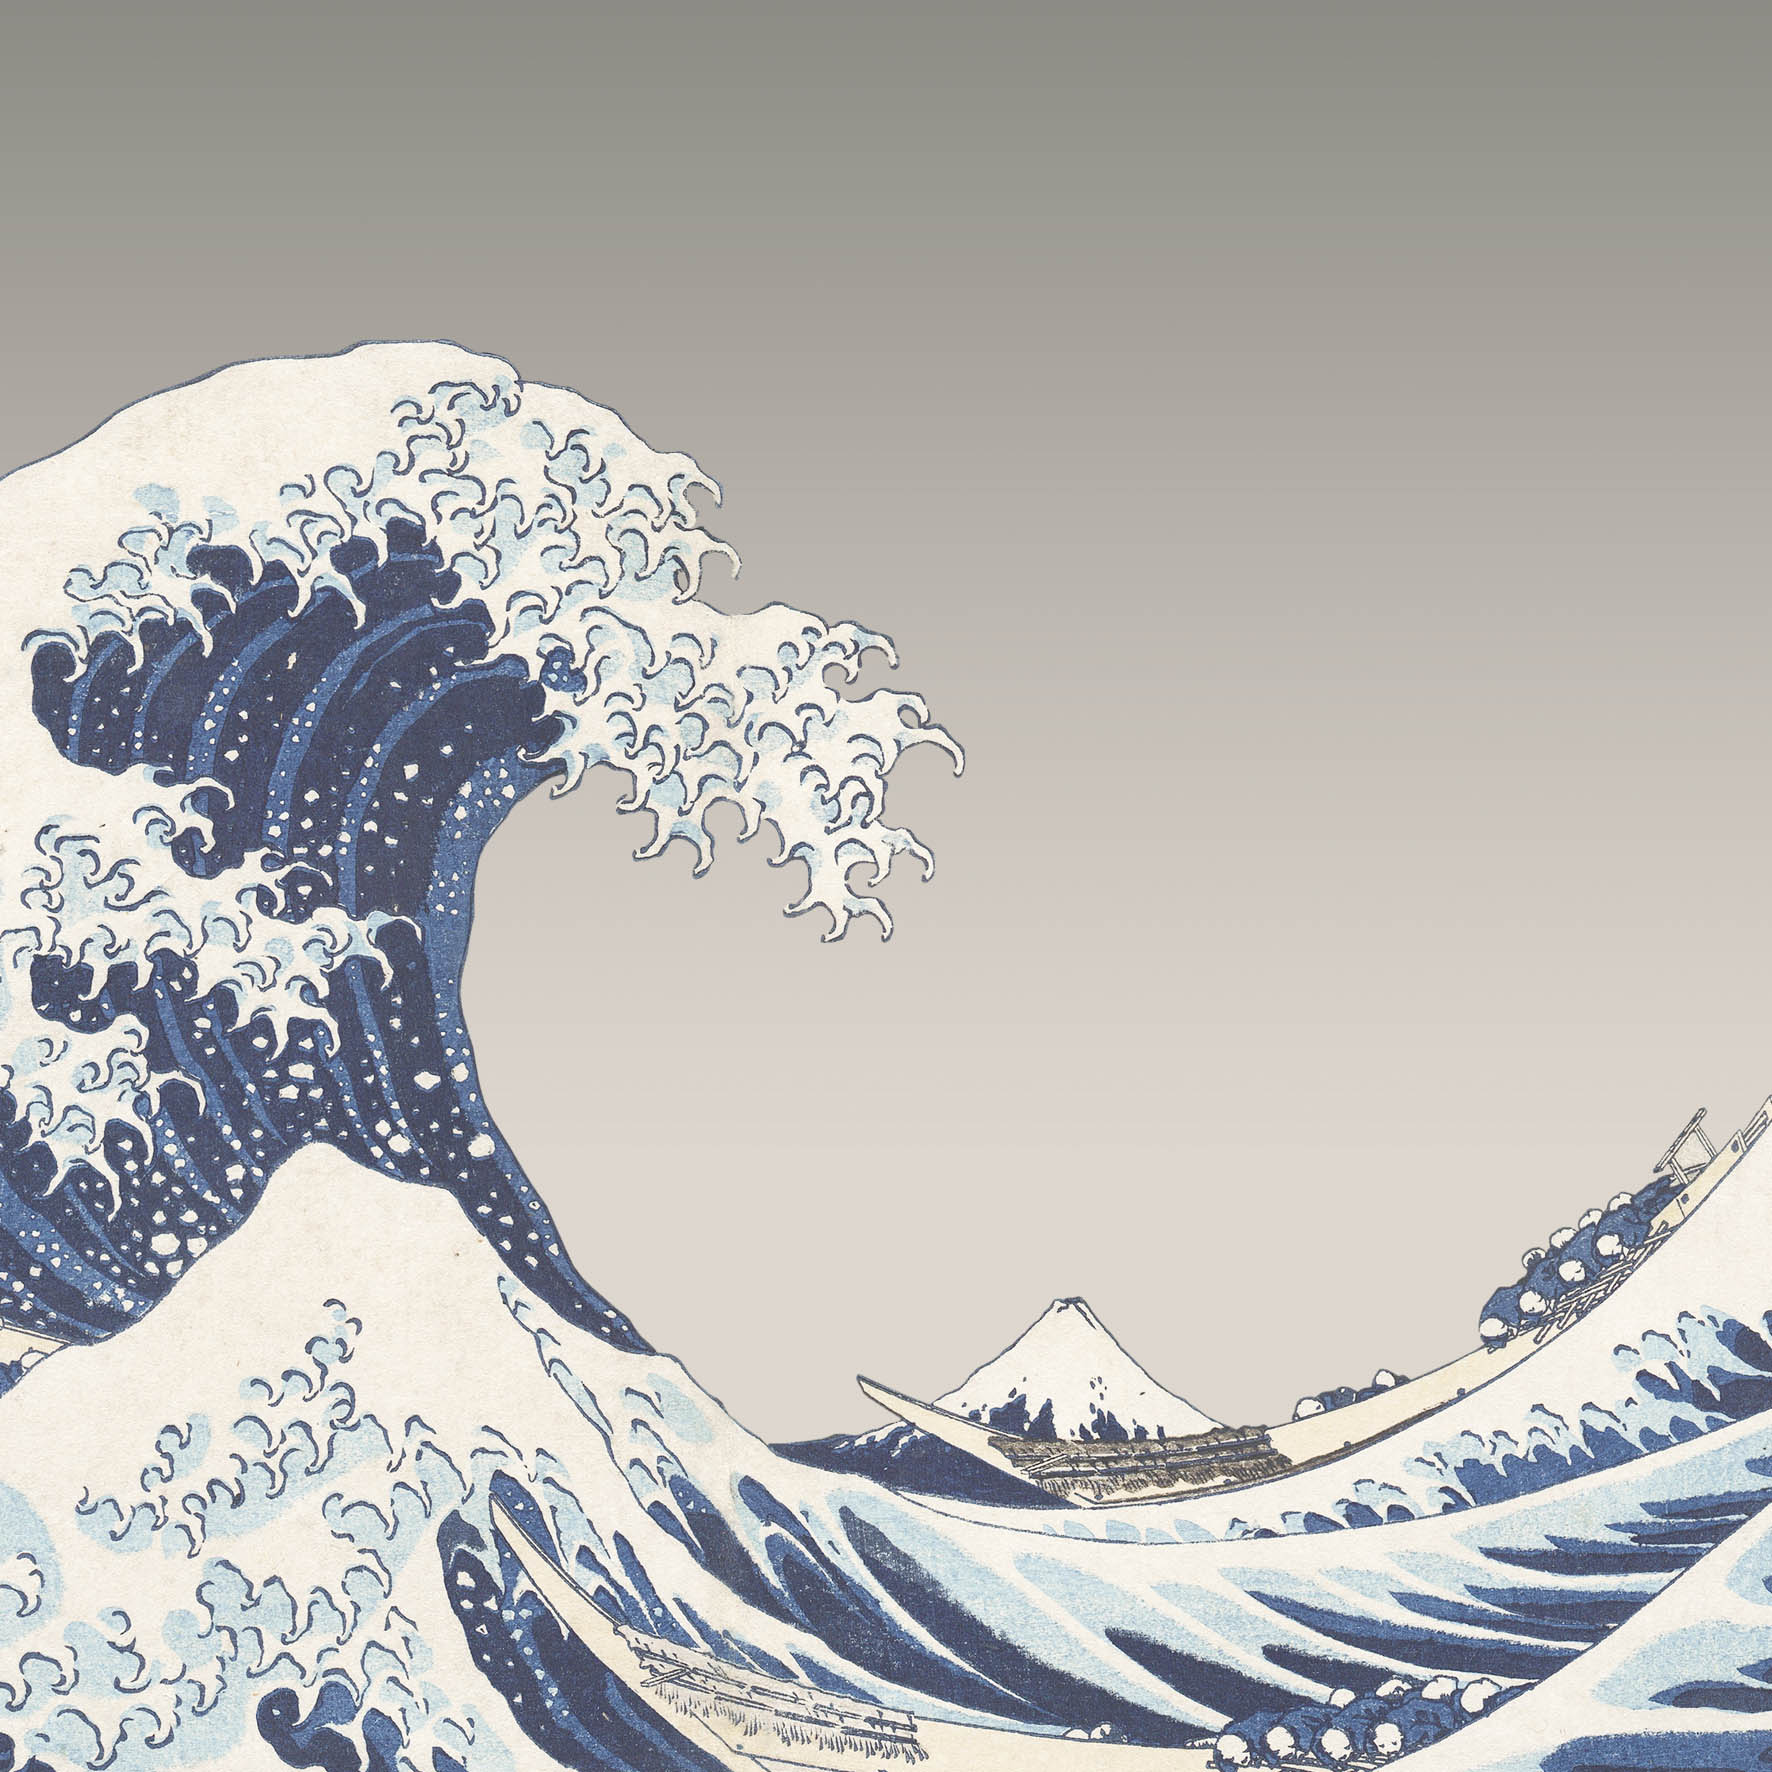 Hokusai. The Master’s Legacy